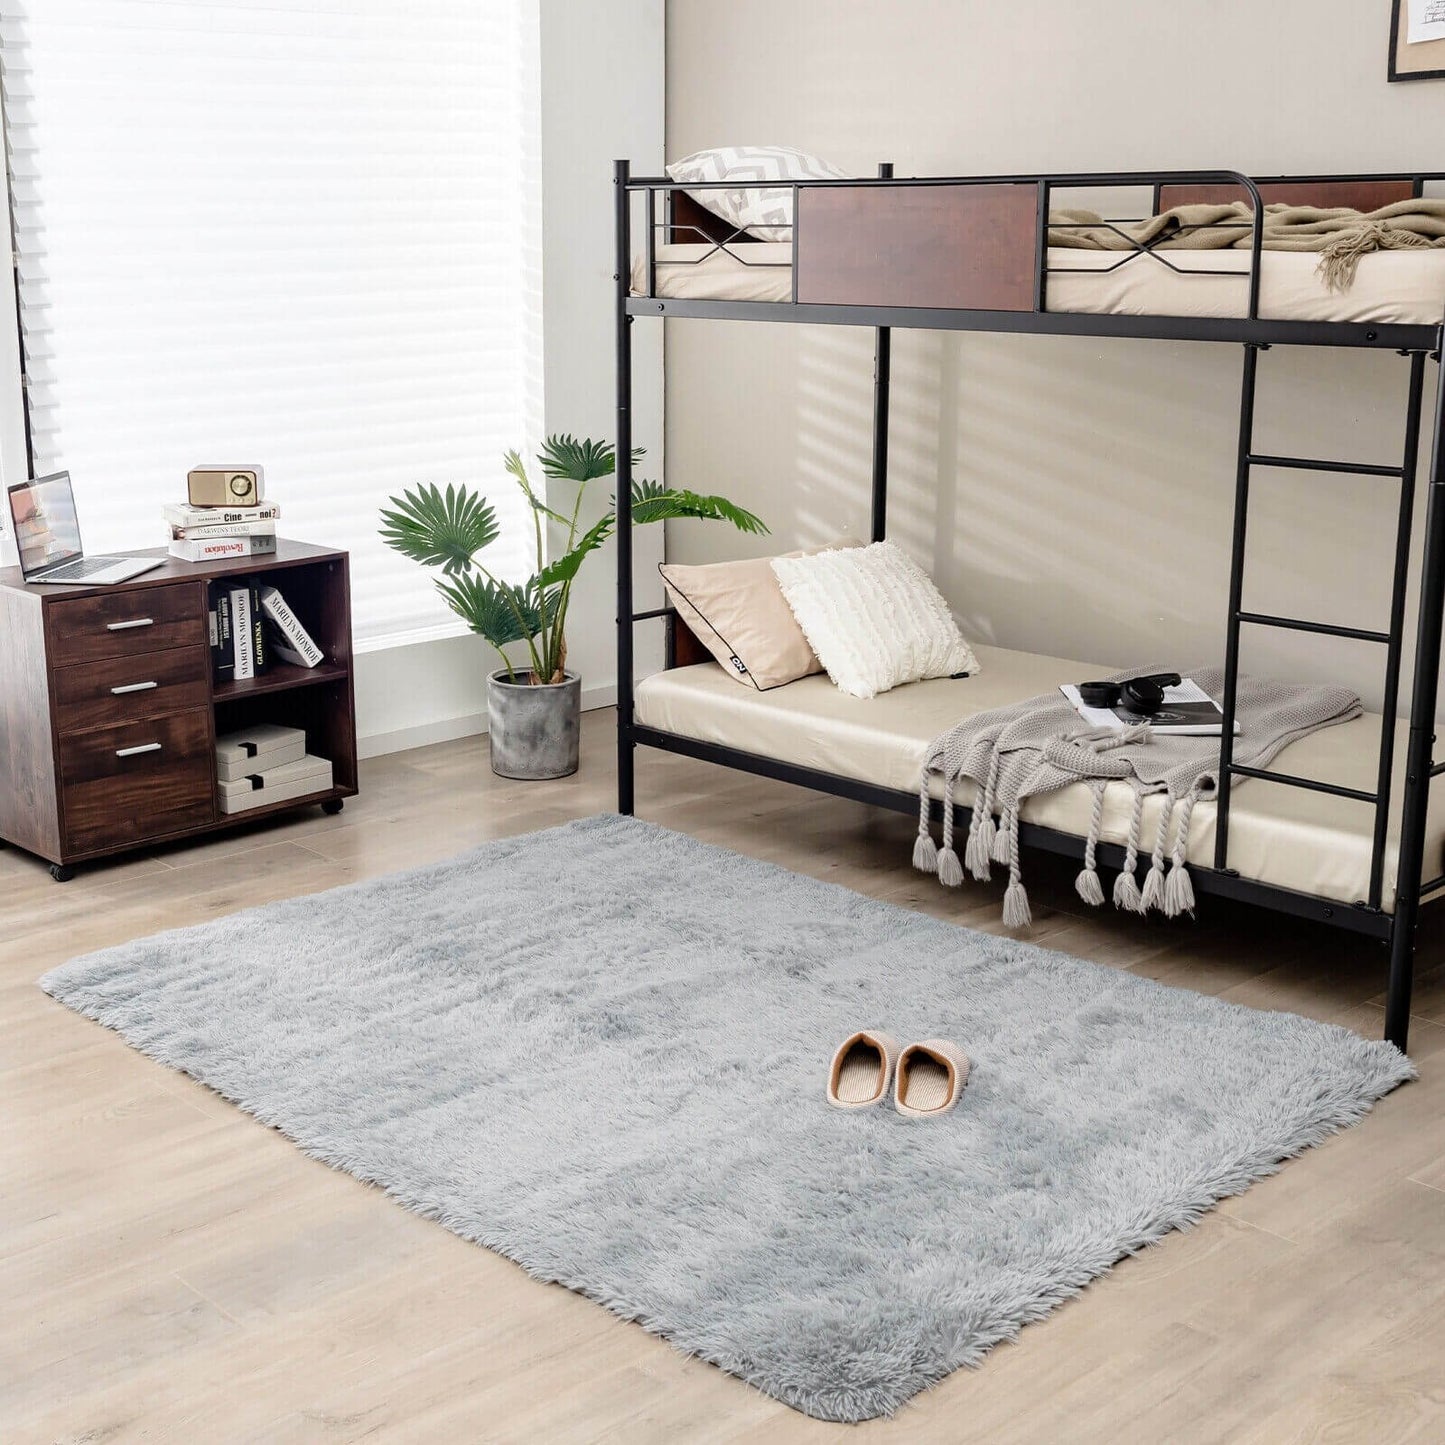 5 x 7 Feet Modern Rectangular Soft Shag Area Rug for Living Room Bedroom, Light Gray - Gallery Canada